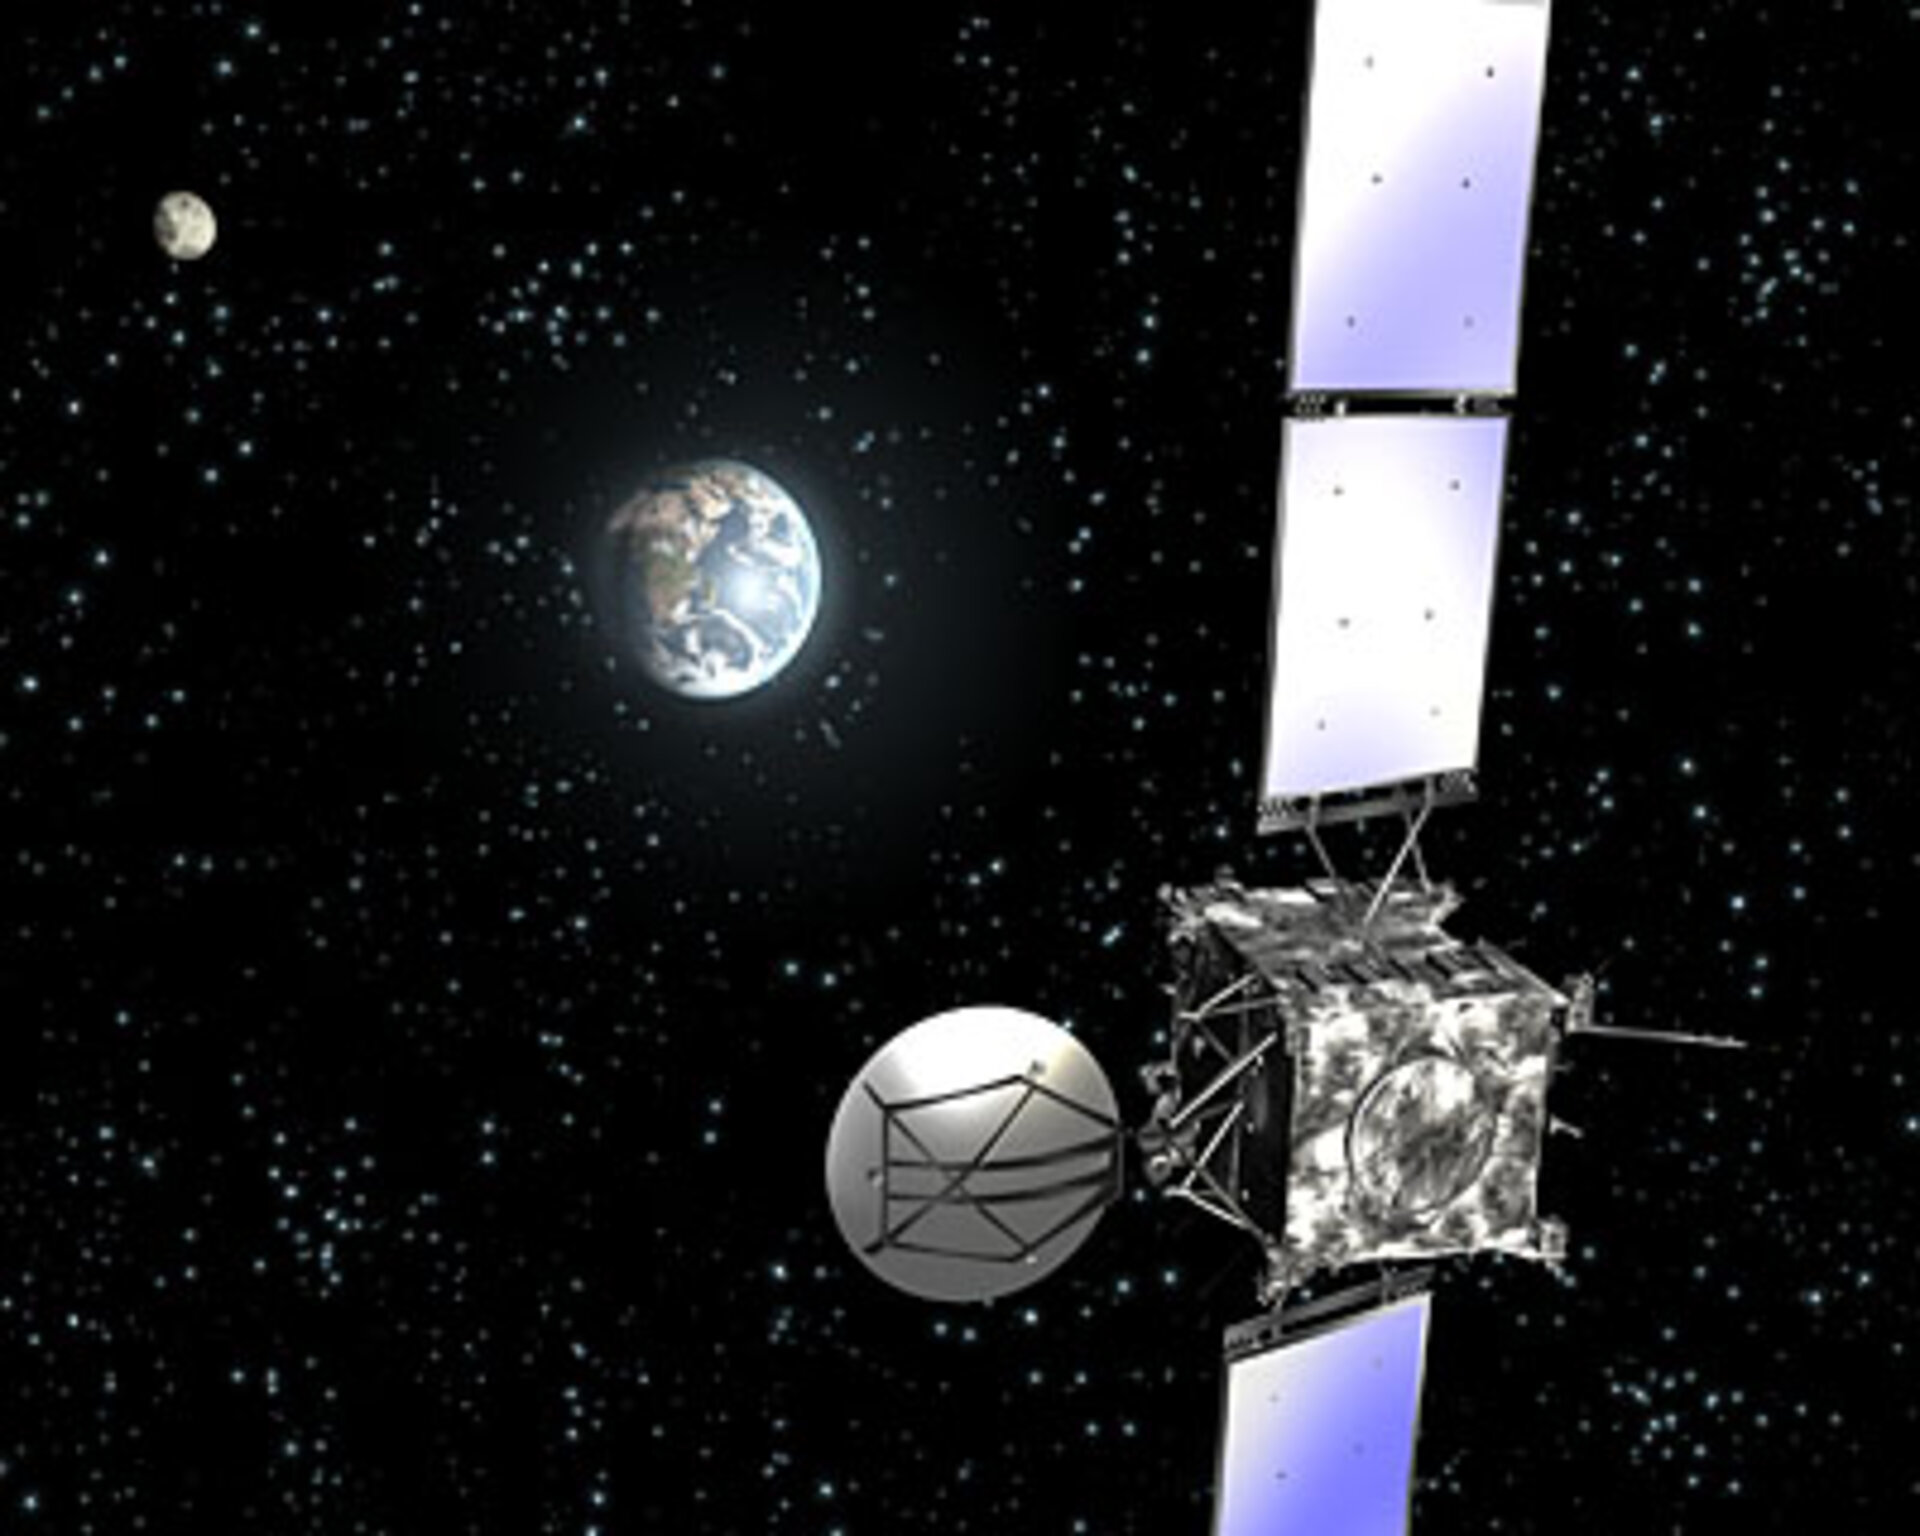 Rosetta’s second Earth swing-by